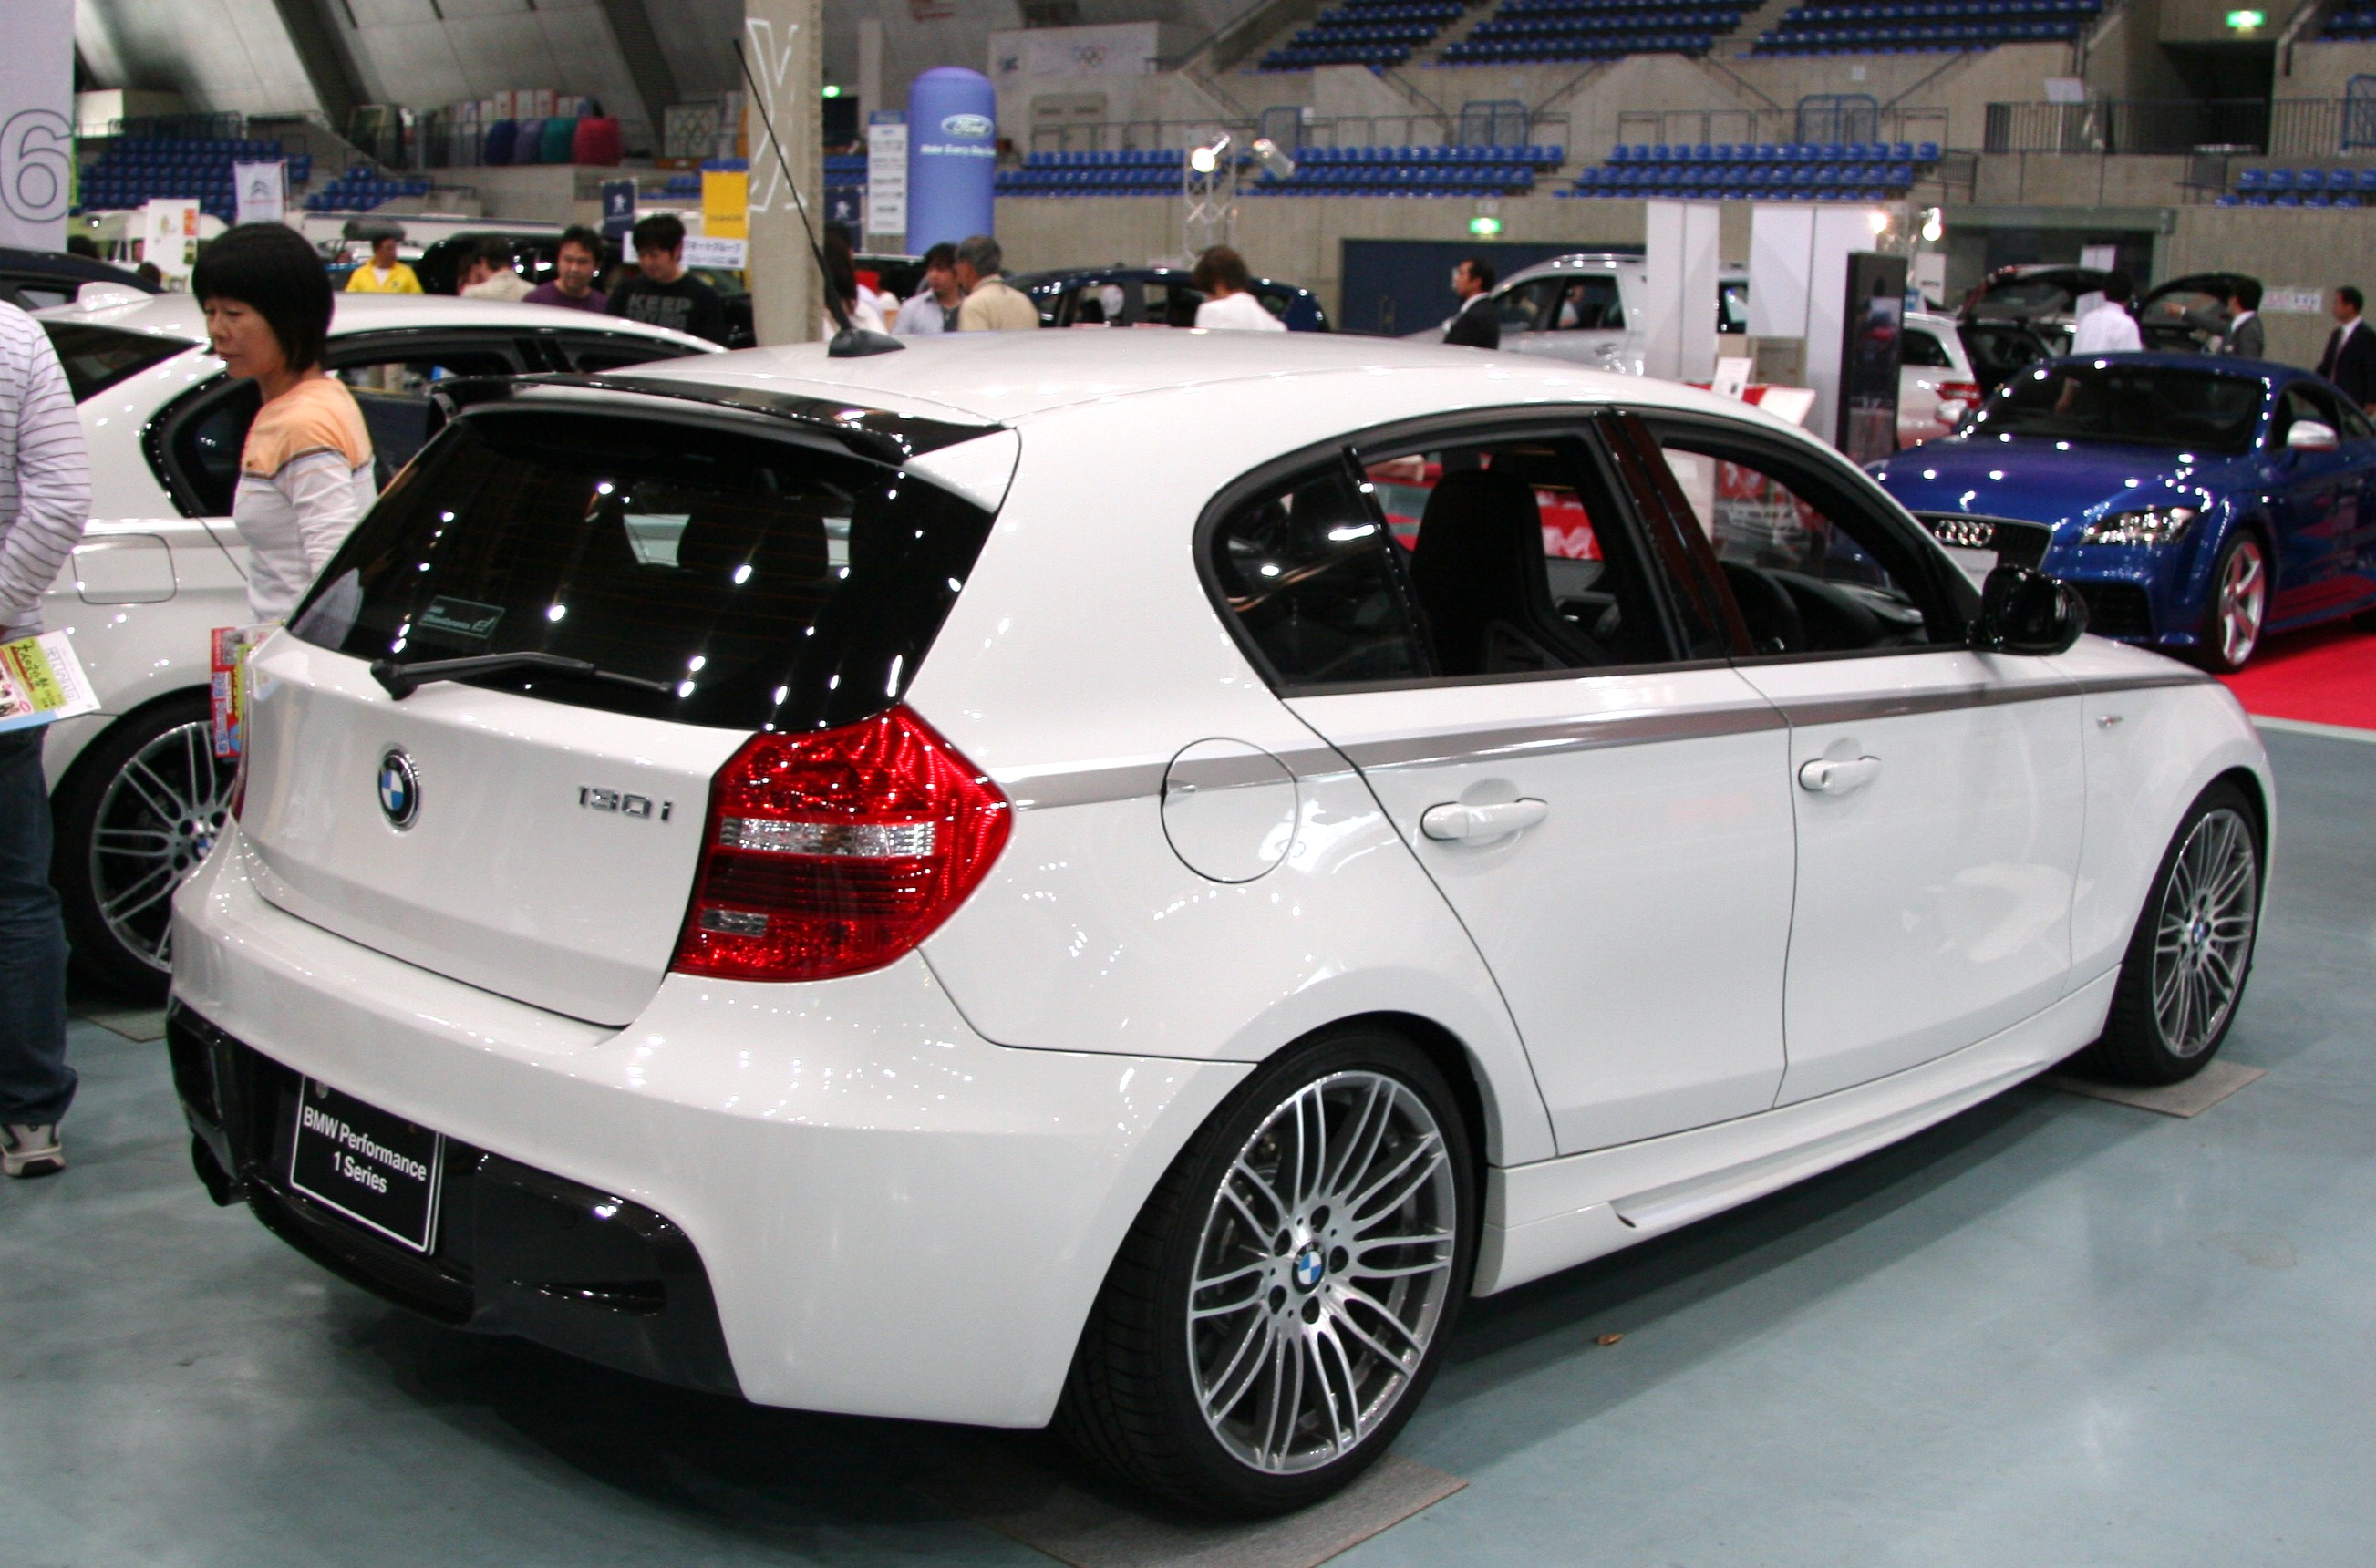 File:BMW 130i rear.jpg - Wikimedia Commons